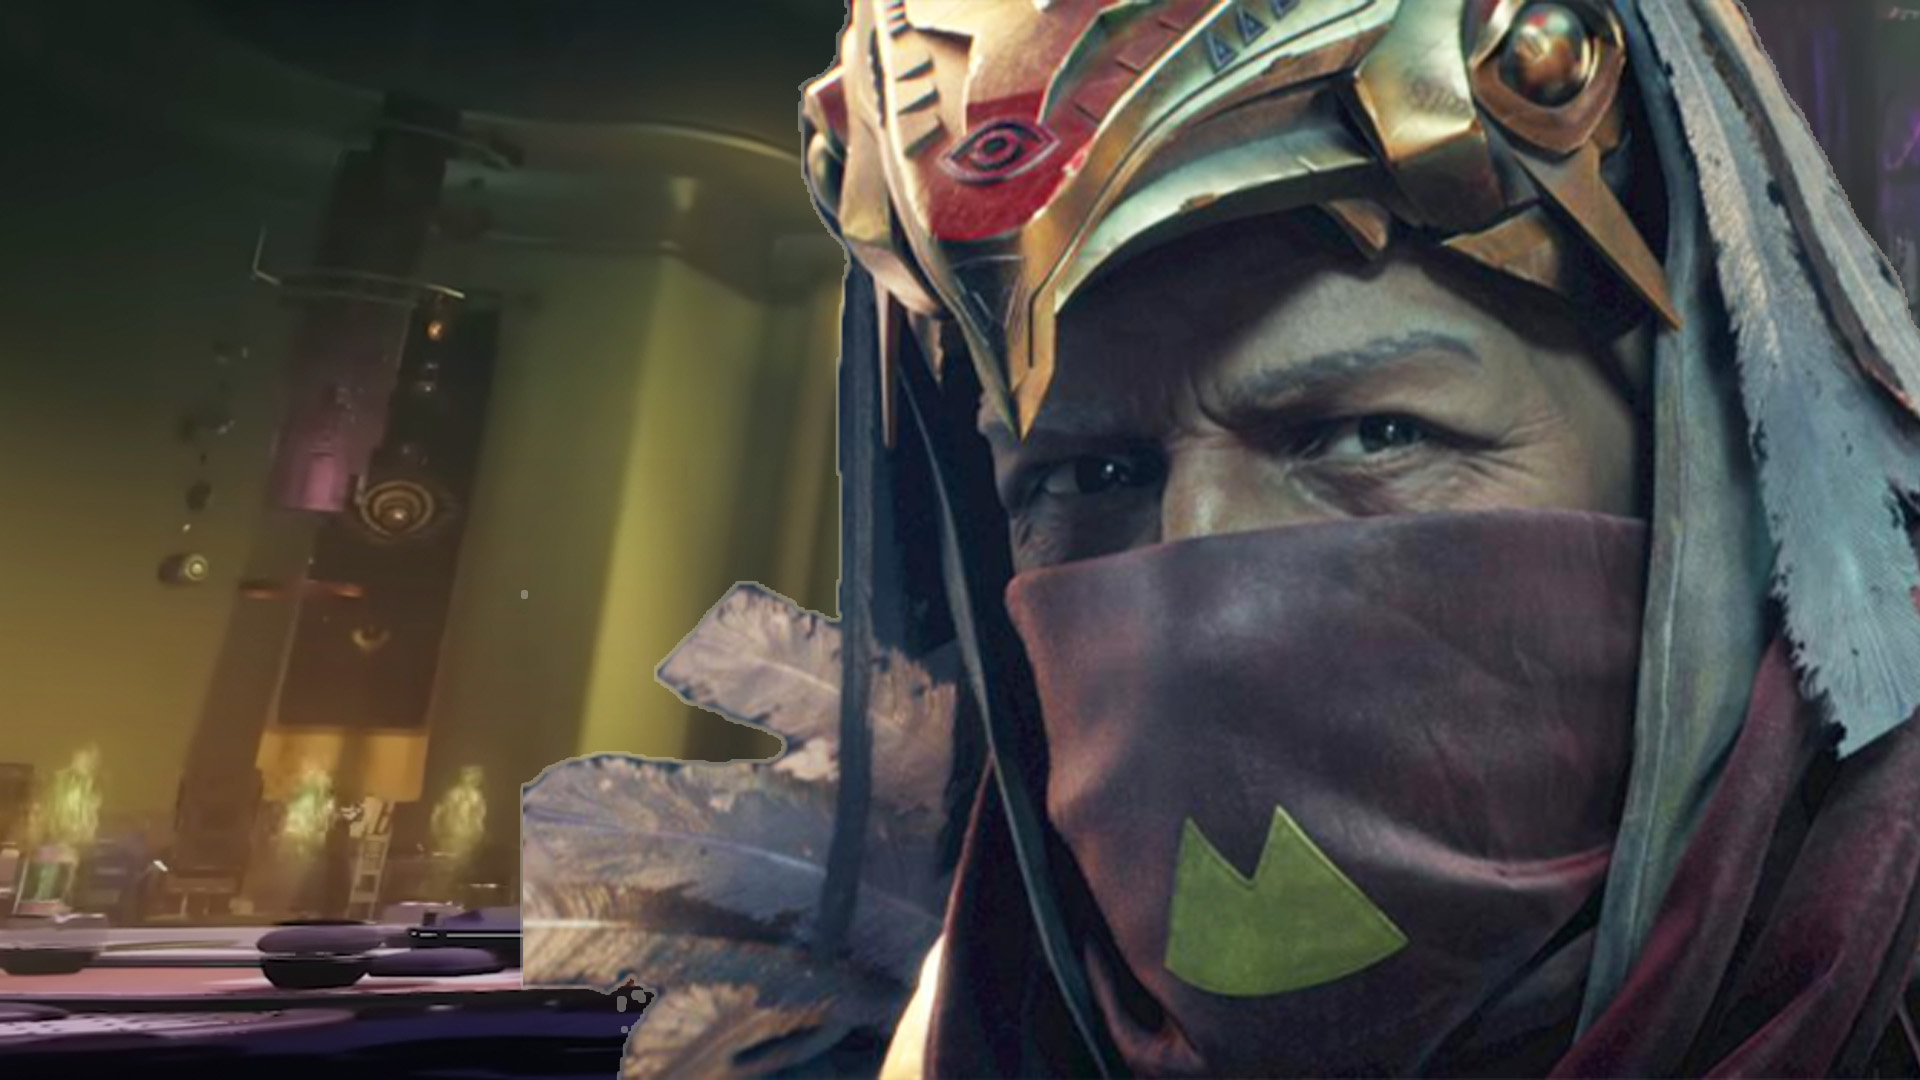 Destiny 2 Neomuna trailer hints at Osiris vendor role